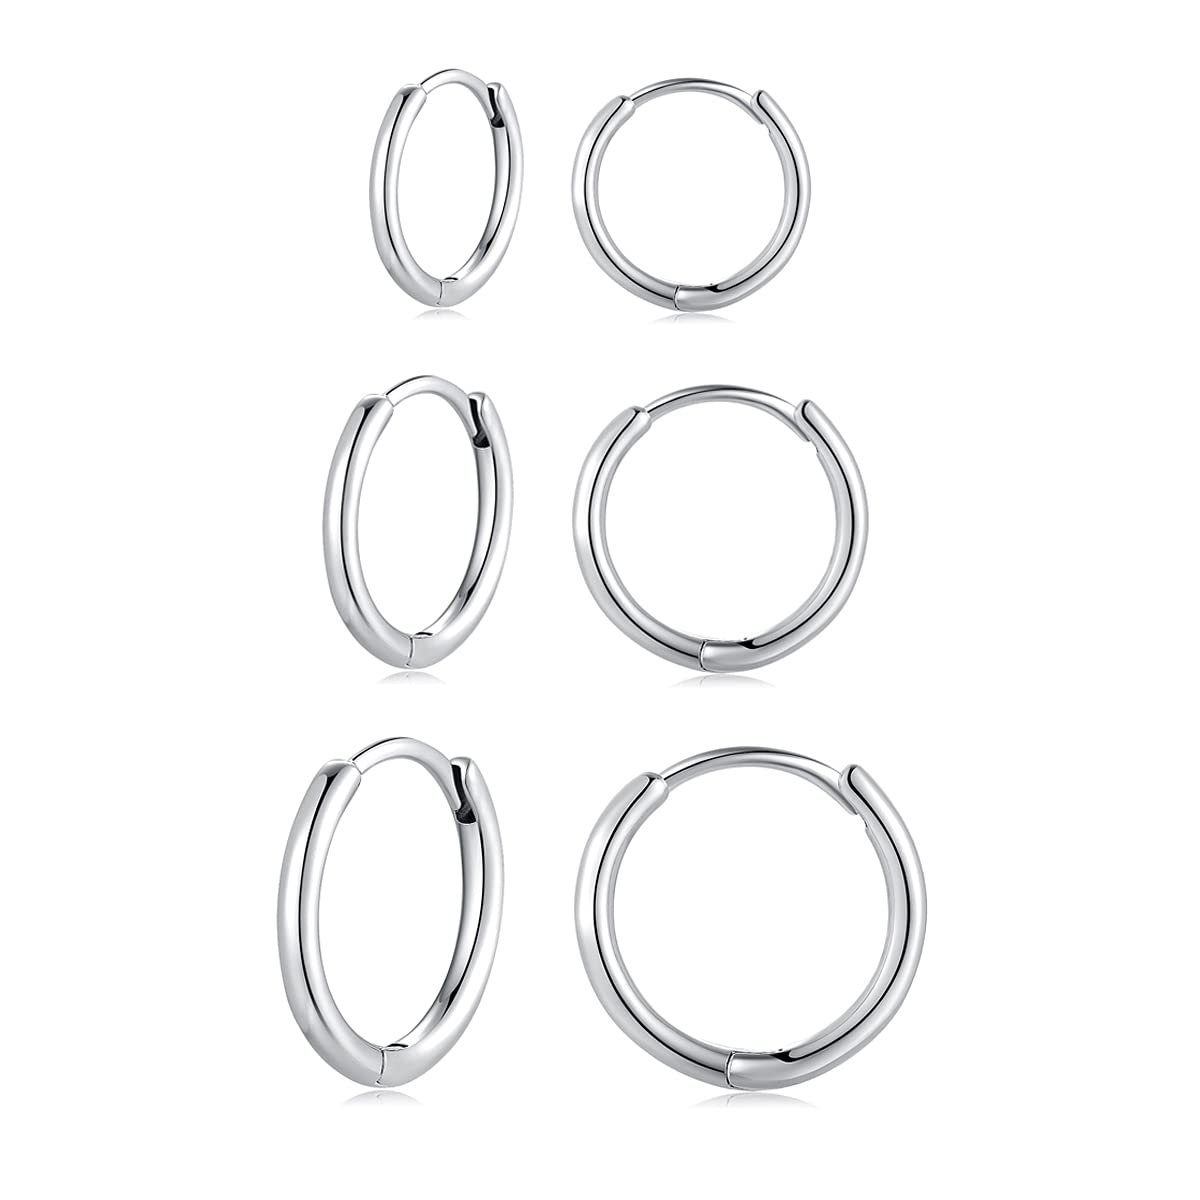 Deyanse Silver Hoops Earrings for Women, 925 Sterling Silver Hoop Earrings Set, Silver Small Sleeper Huggie Hinged Hoop Earrings, Hypoallergenic Silver Unisex Hoop Earrings Set in 10, 12, 14mm